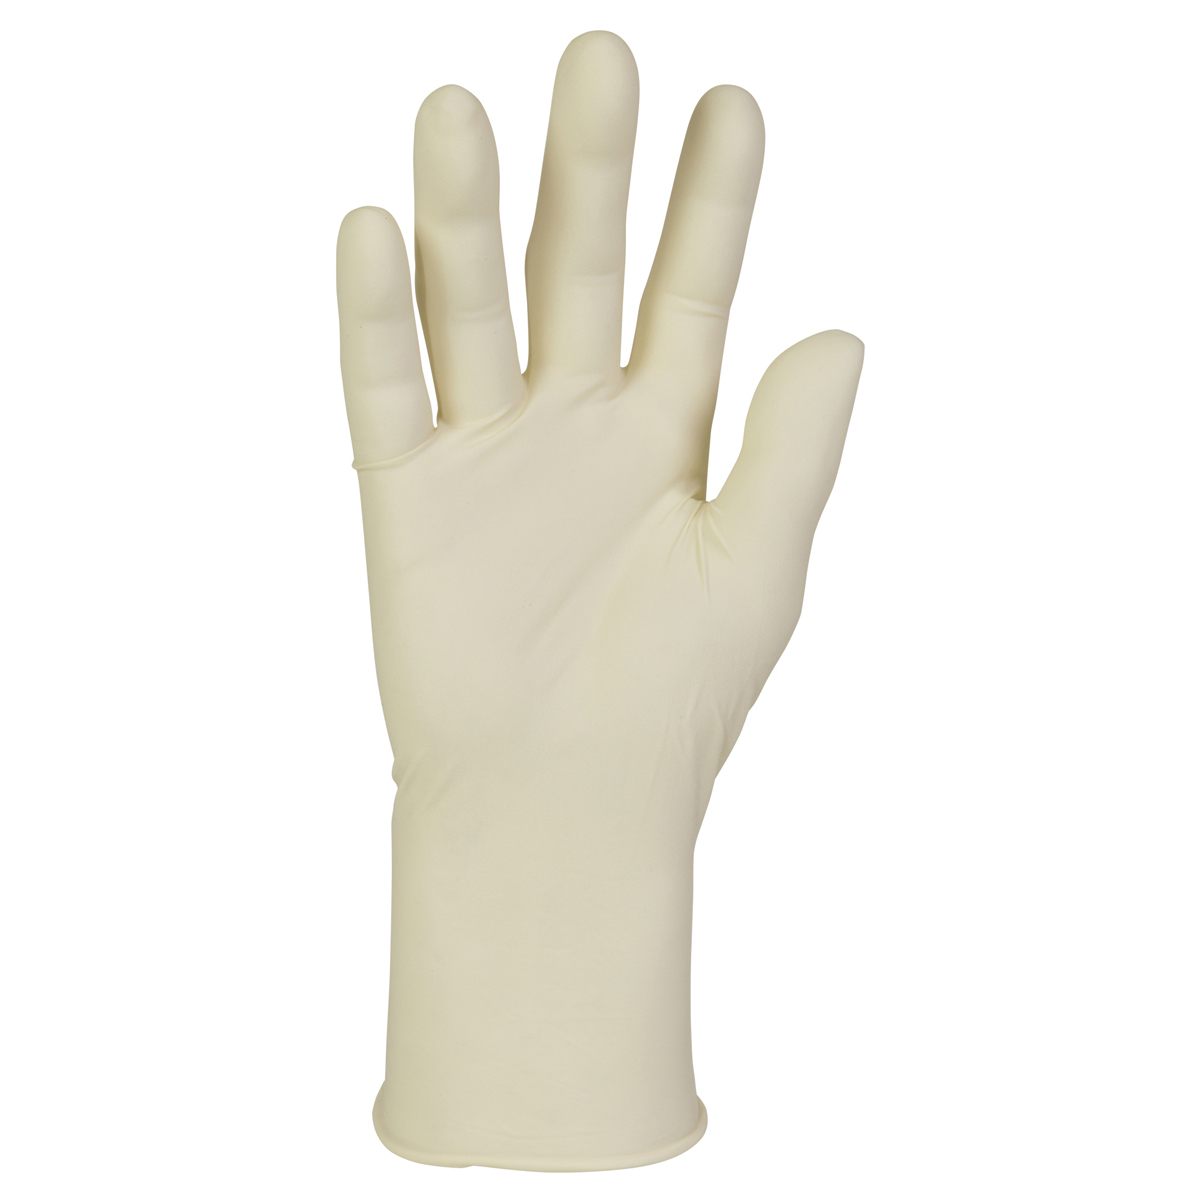 Kimberly-Clark Professional* Medium Natural 6.7 mil PFE Latex Powder-Free Disposable Exam Gloves (100 Gloves Per Box) (Availabil